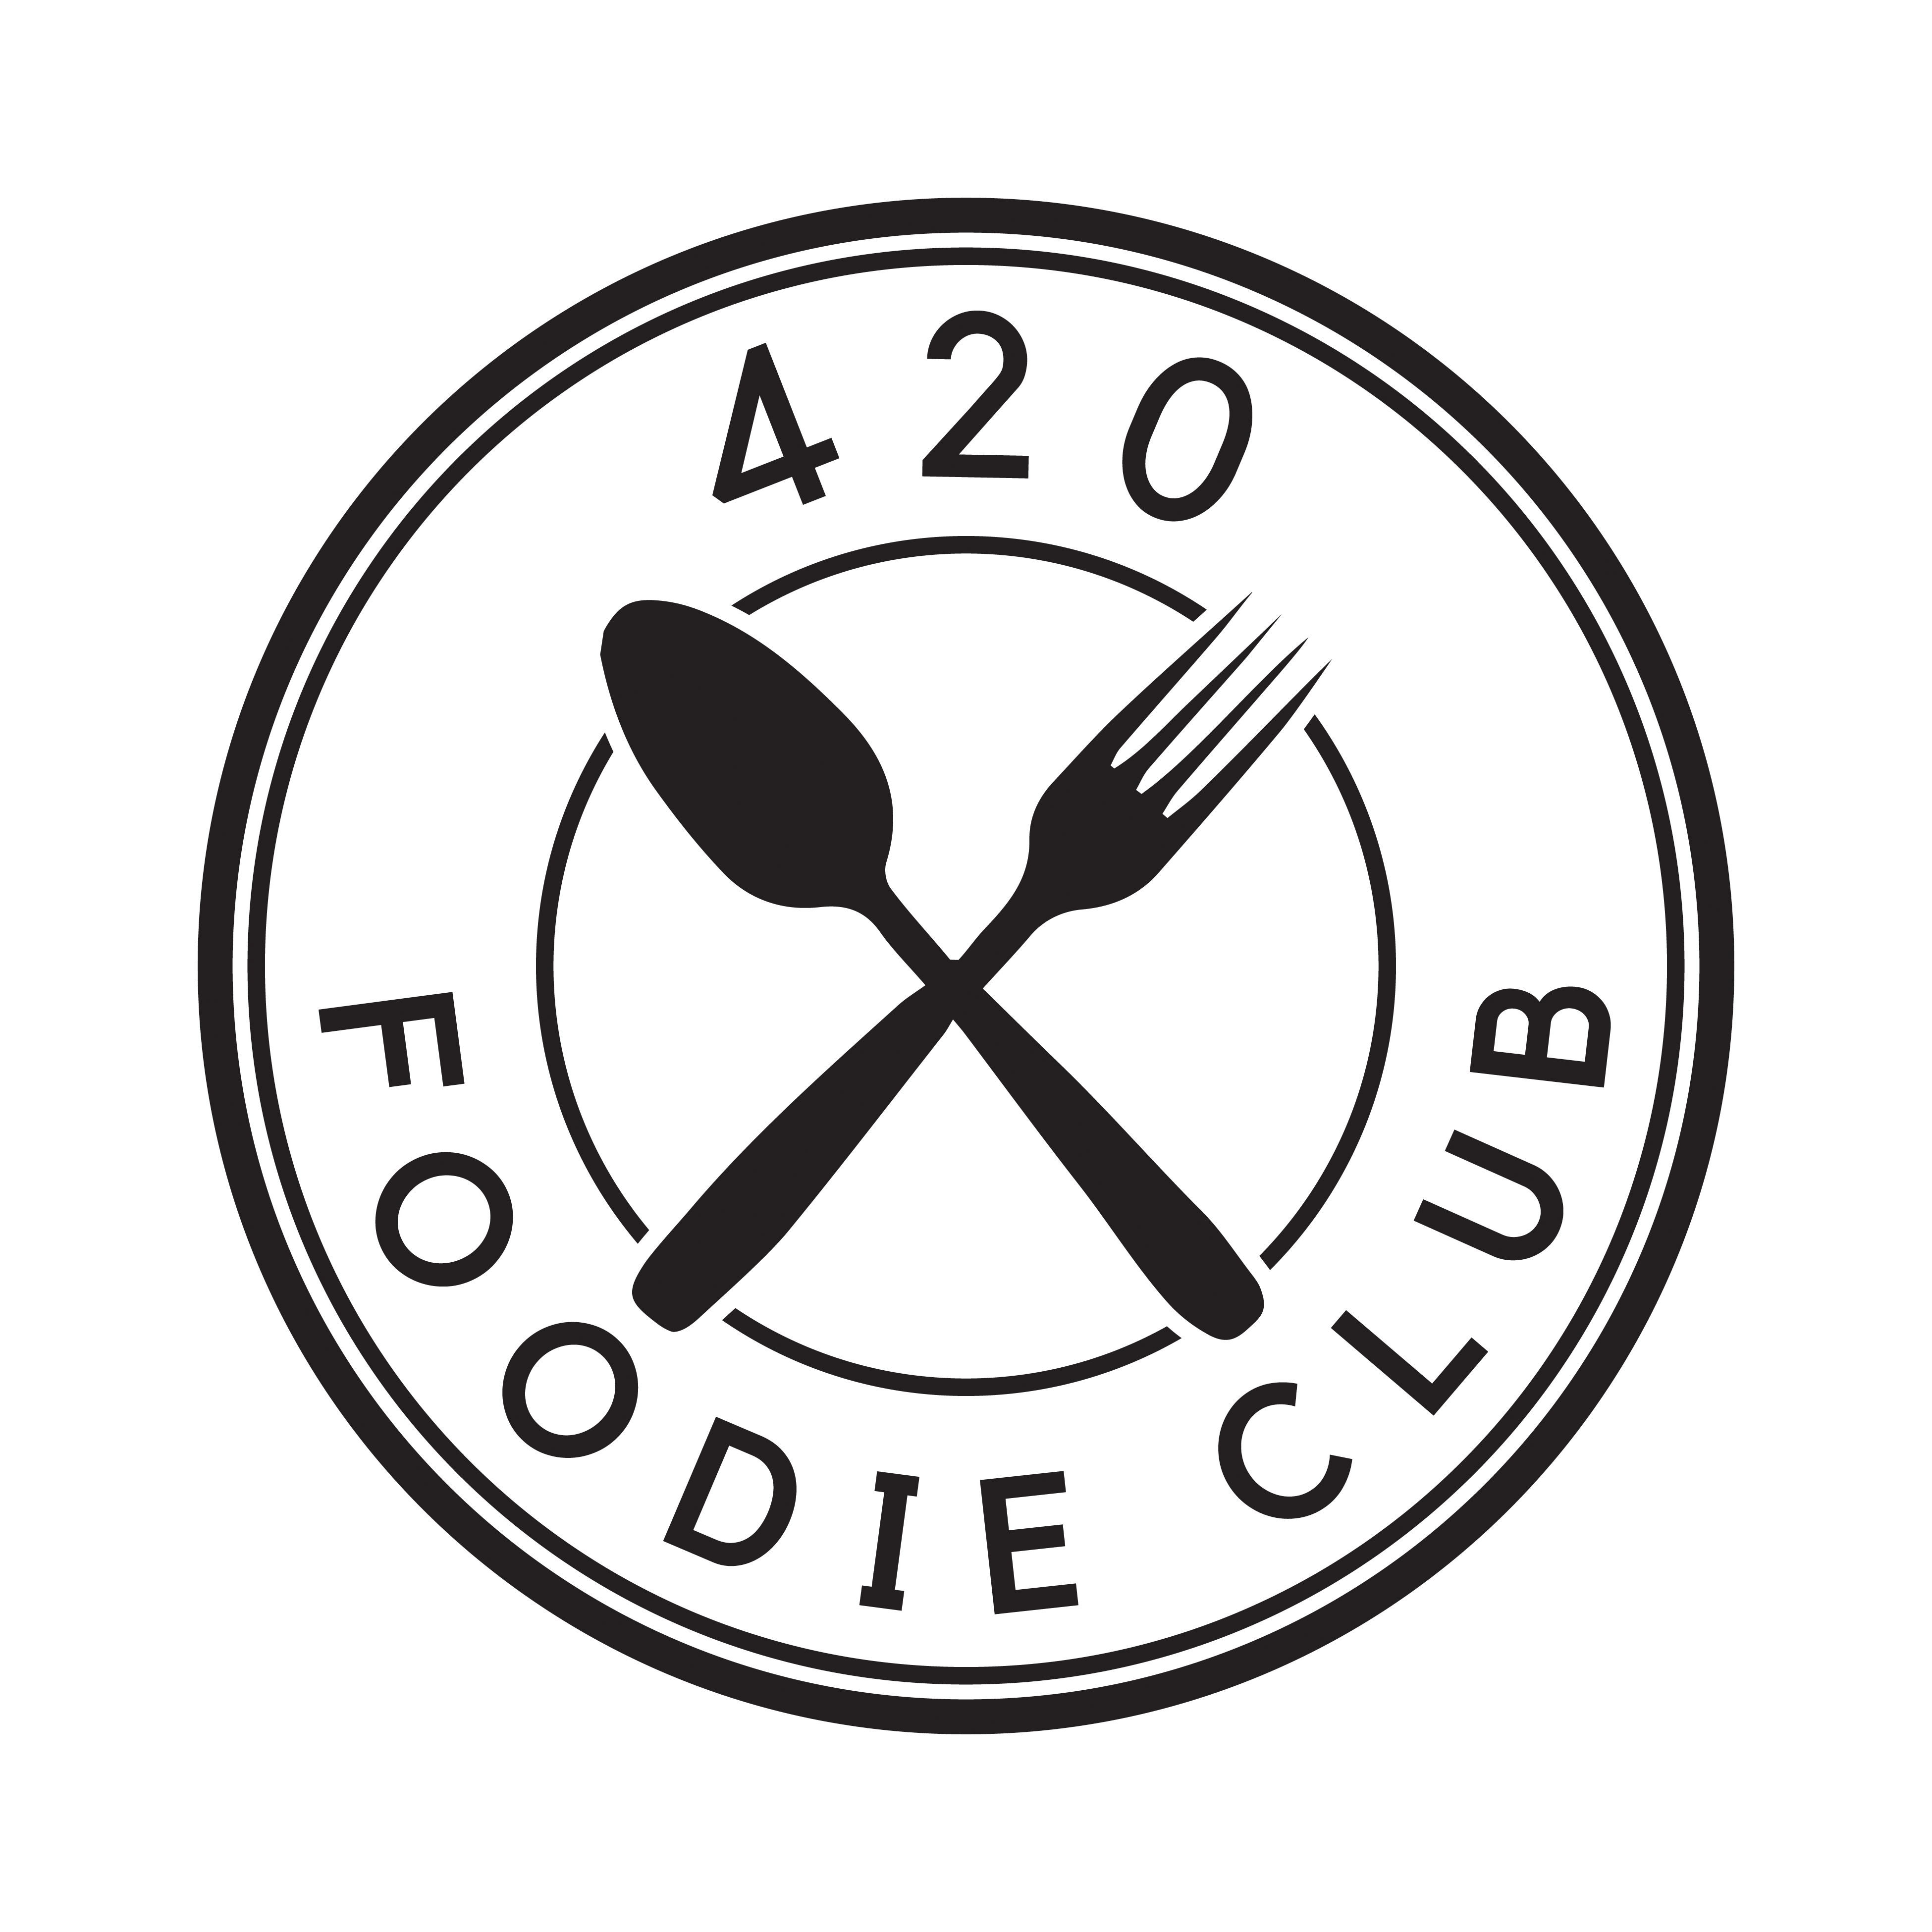 Logo for 420 Foodie Club